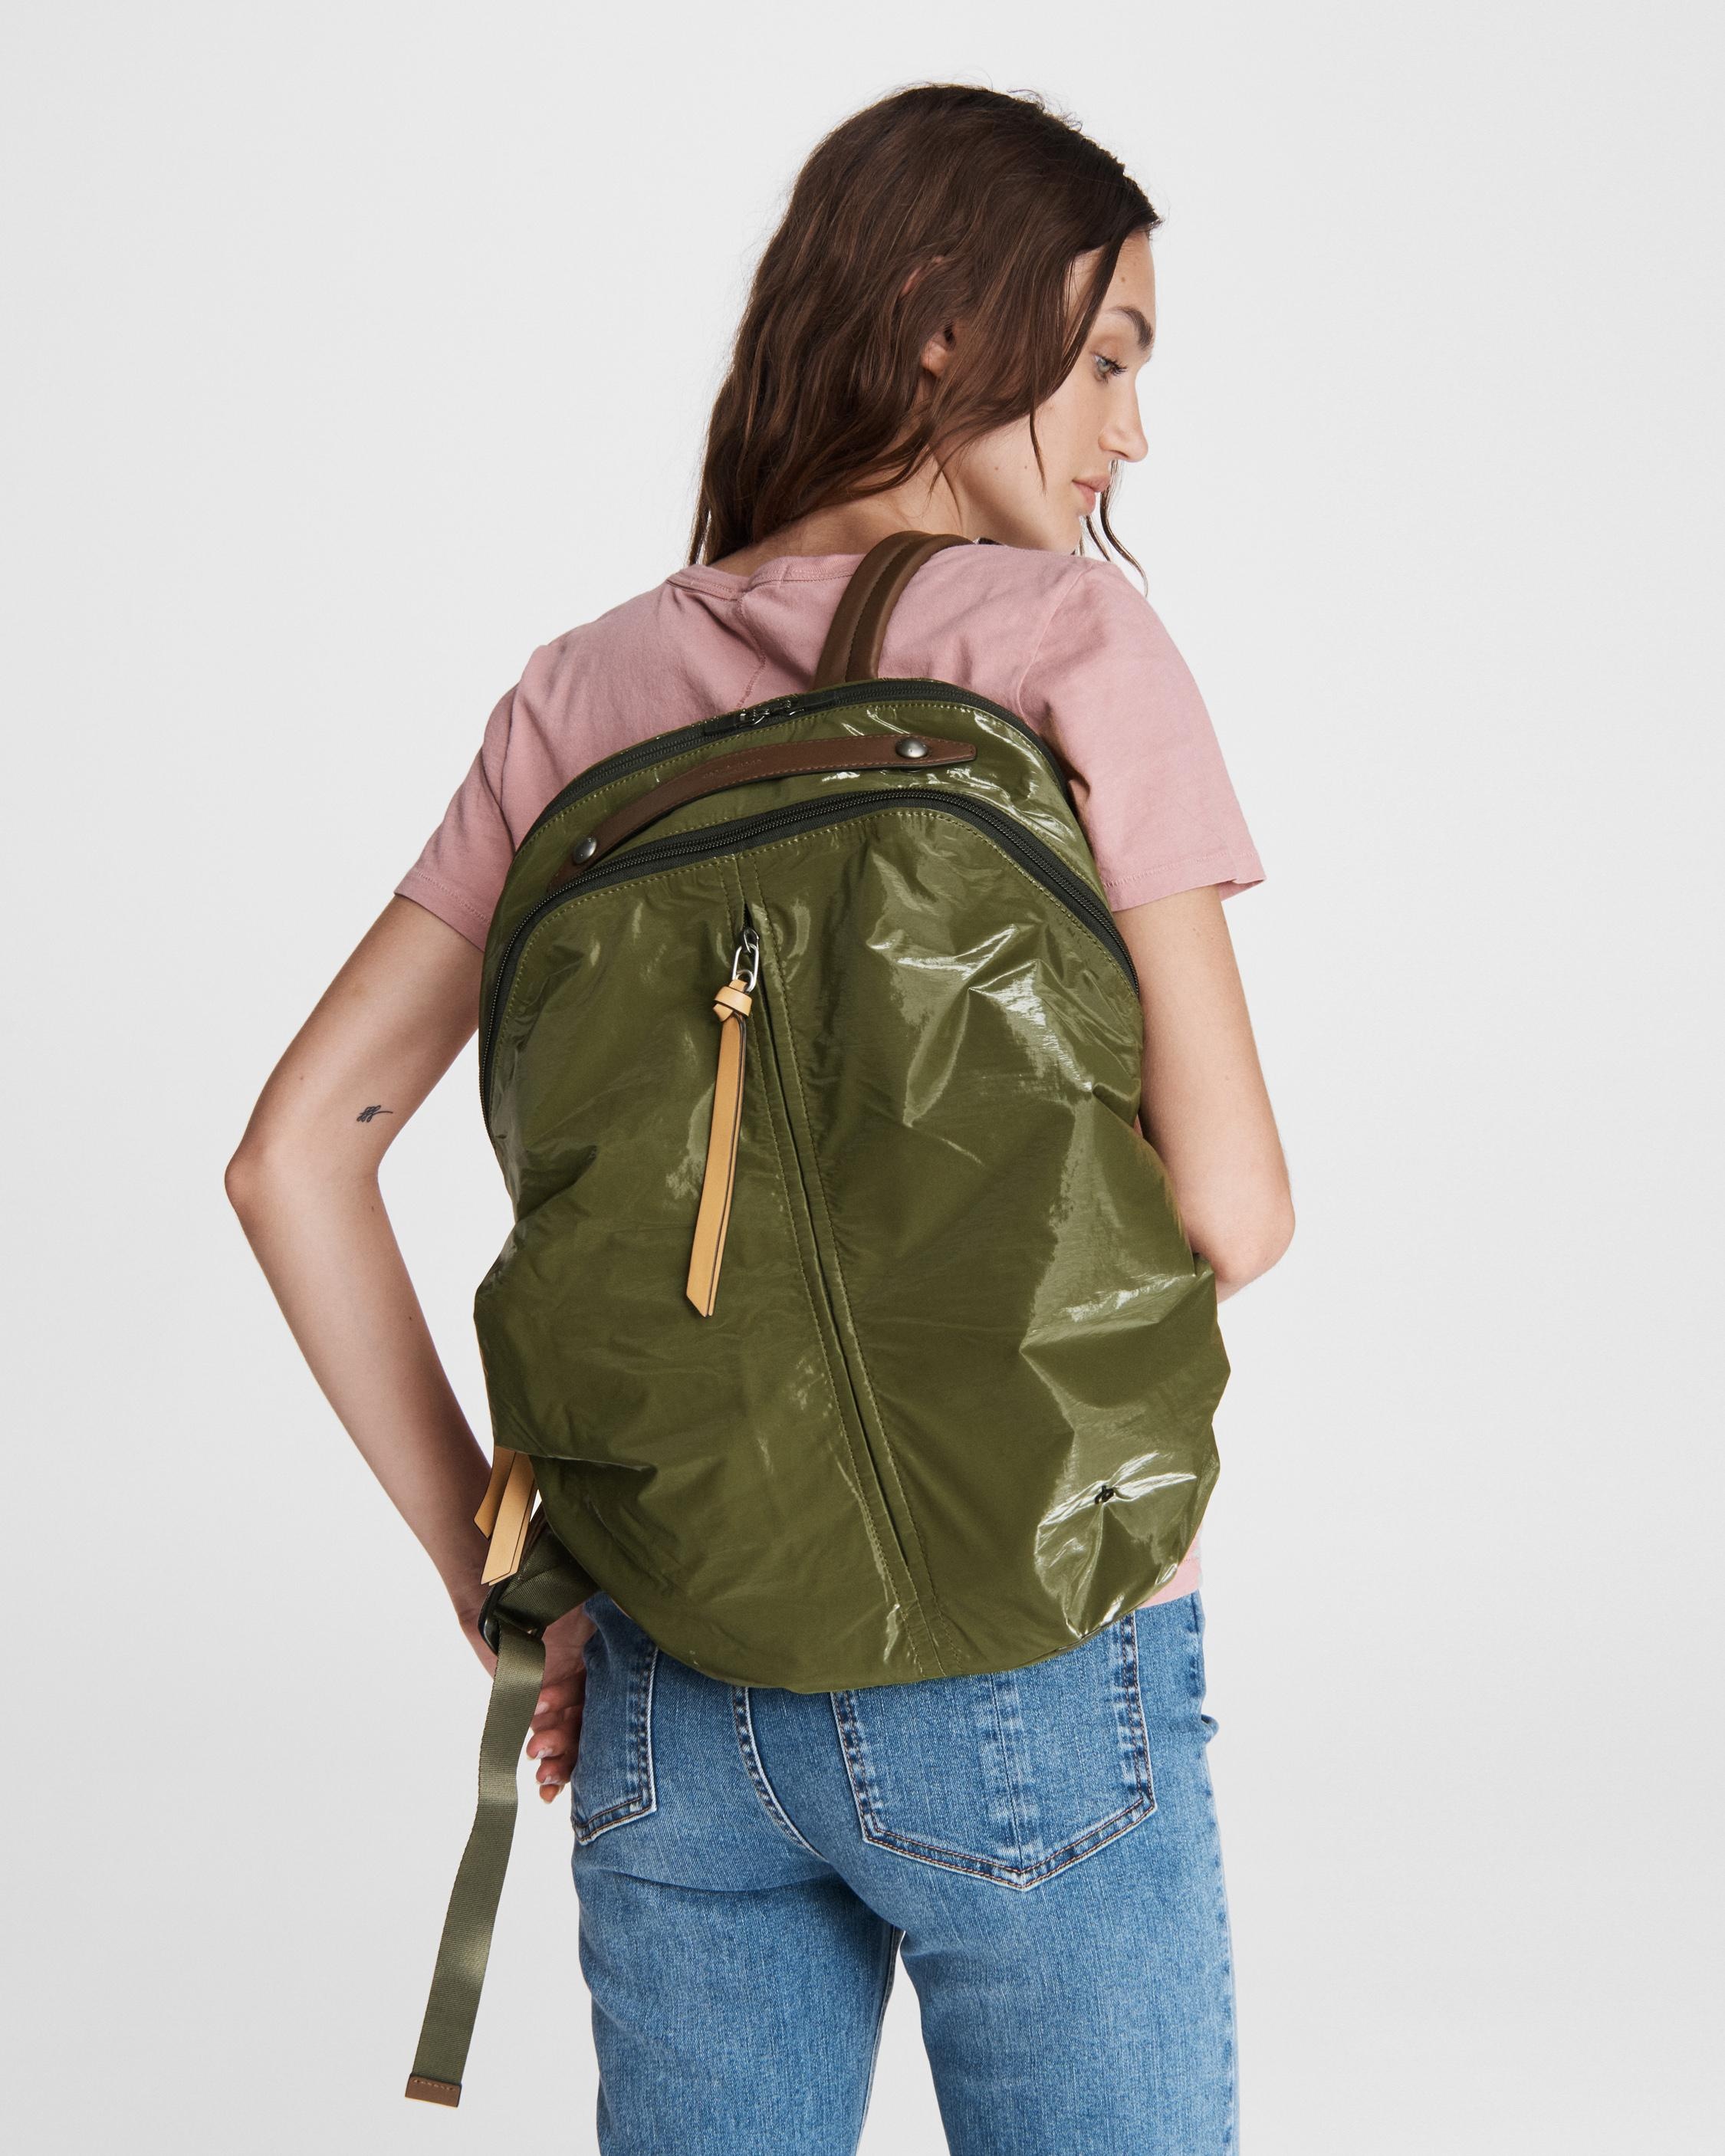 Commuter Backpack - Eco Nylon
Large Backpack - 2